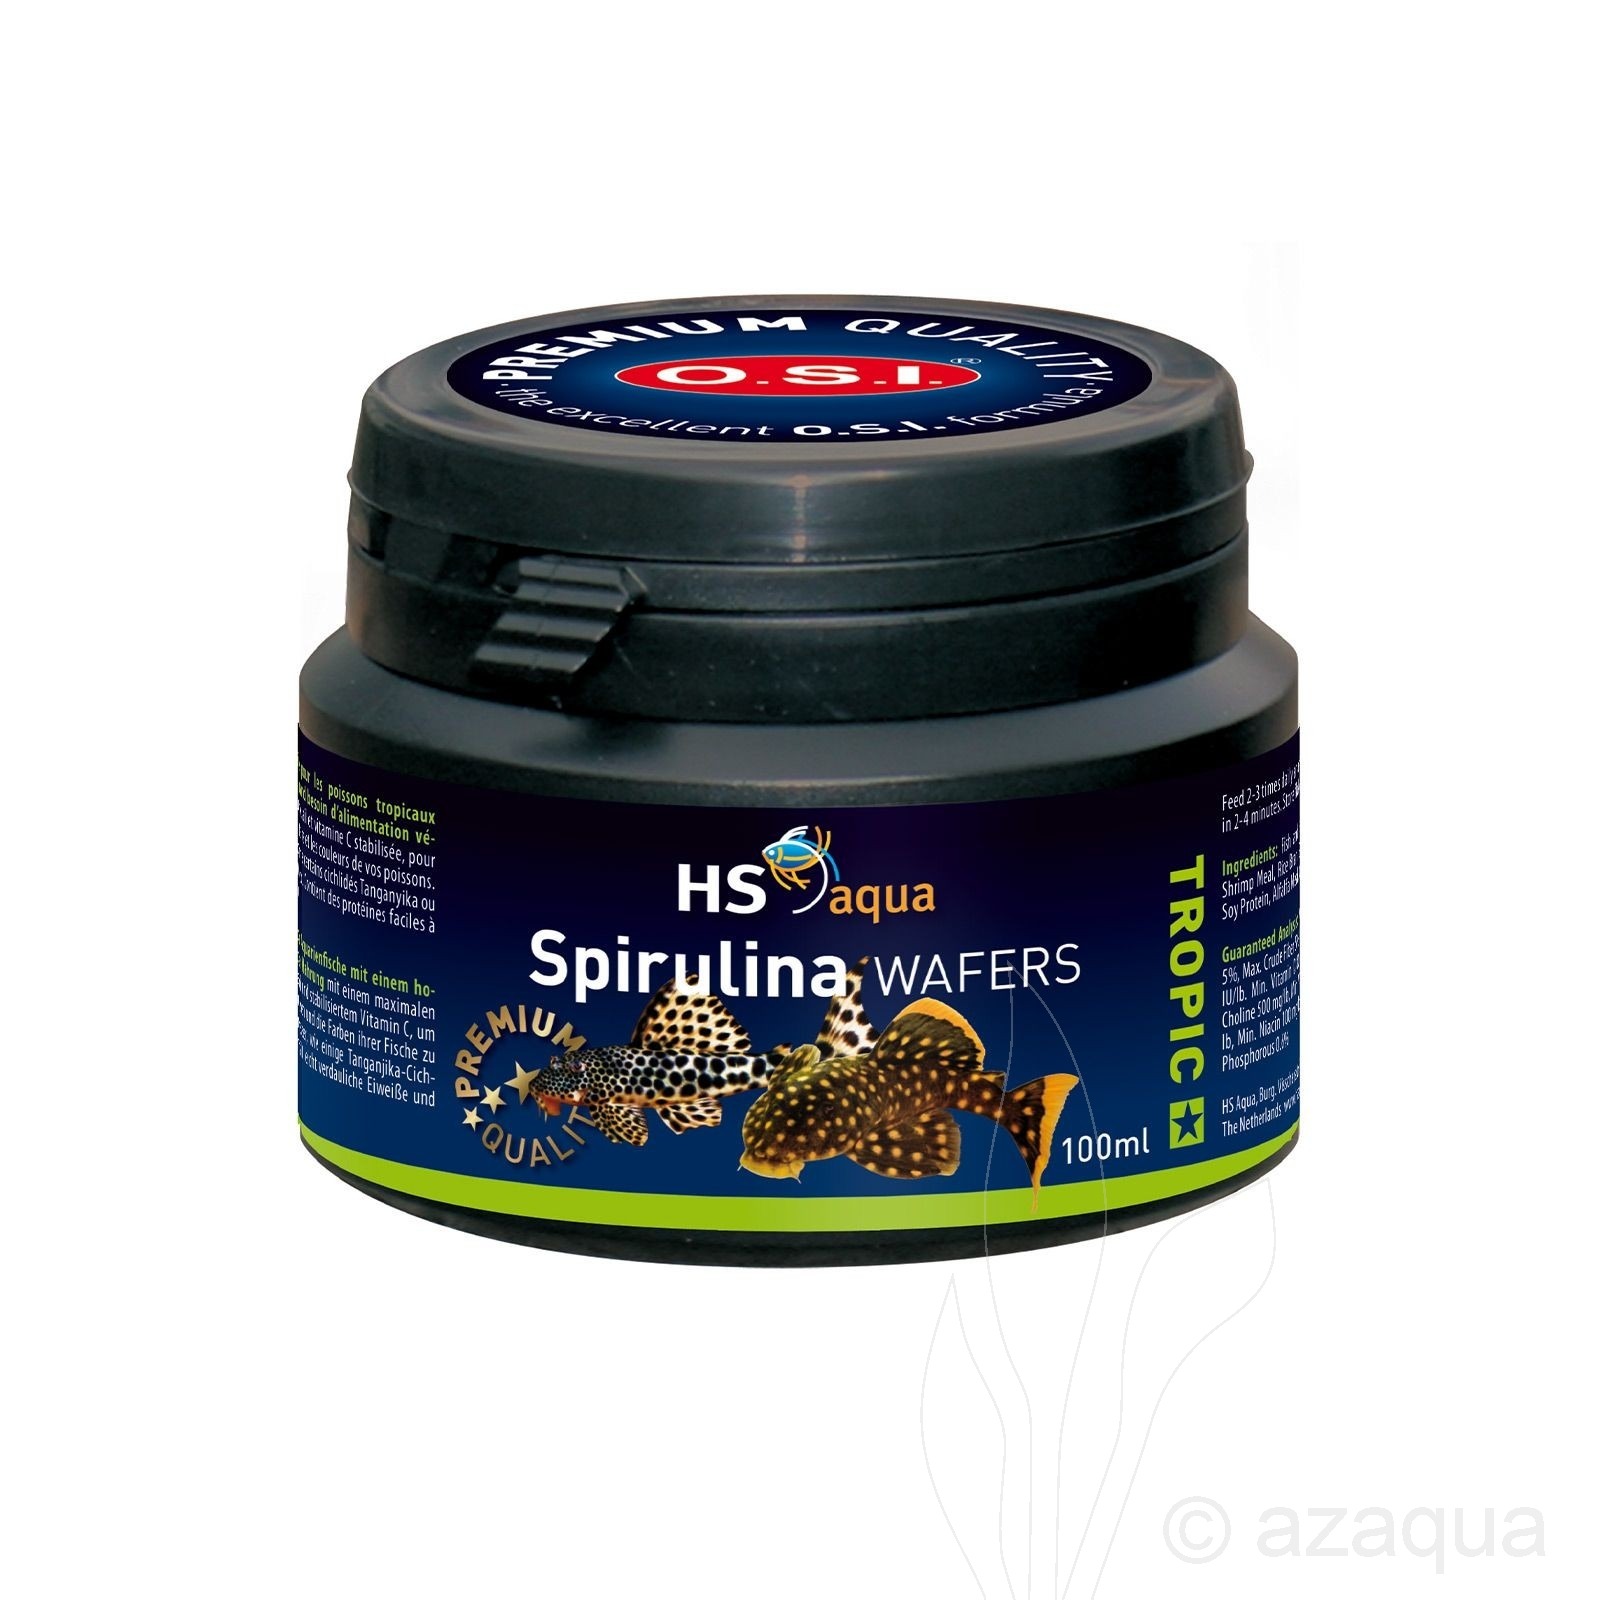 HS aqua Spirulina Wafers 100ml